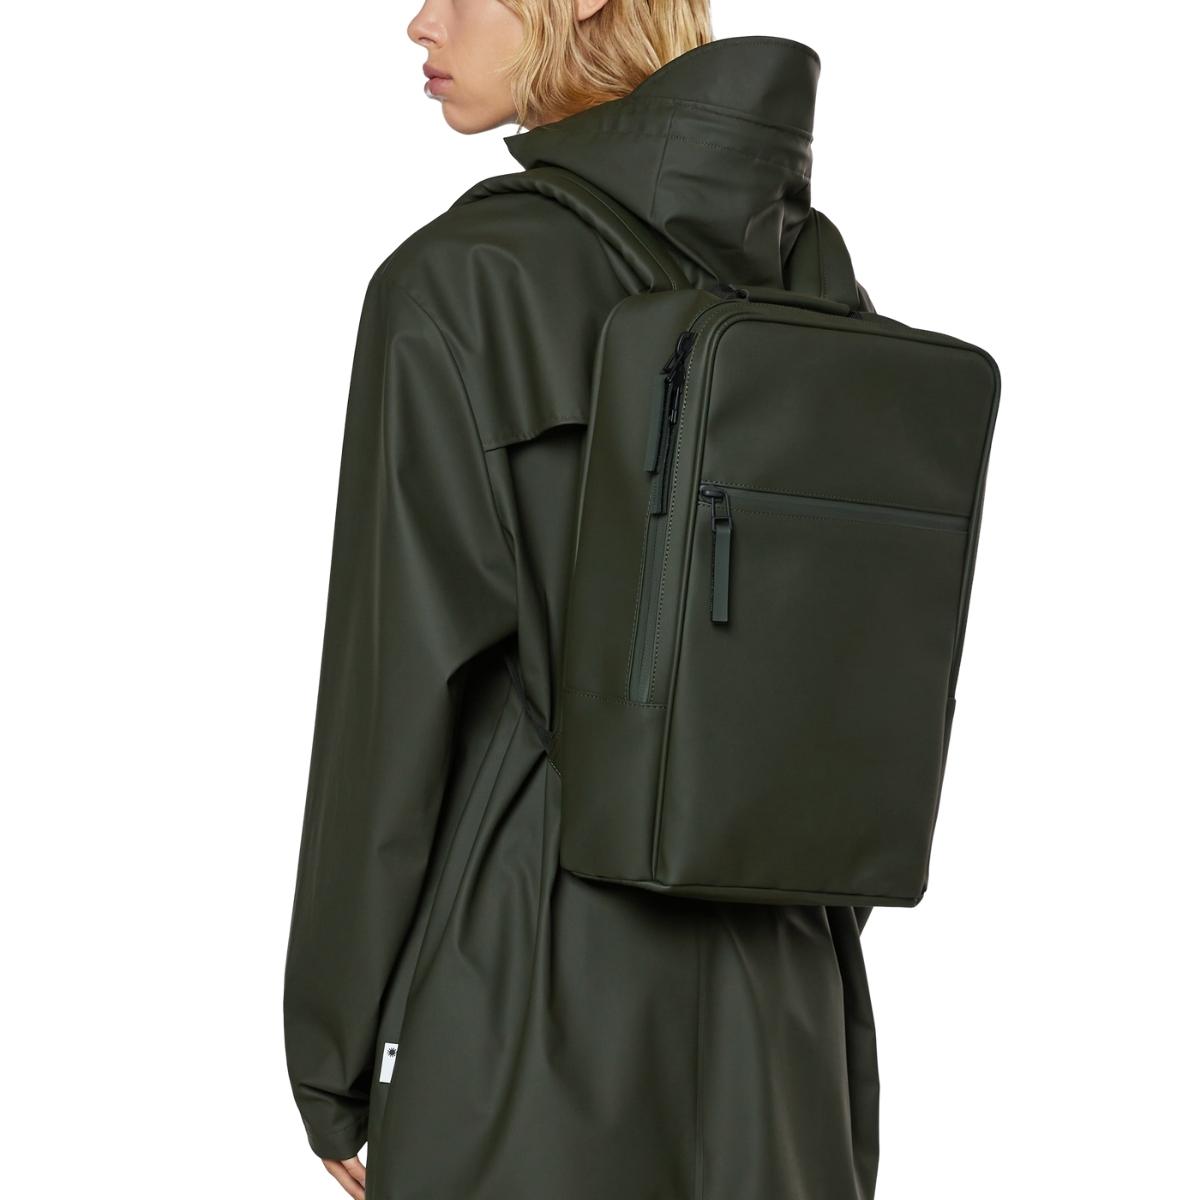 Rains Book Backpack in Green